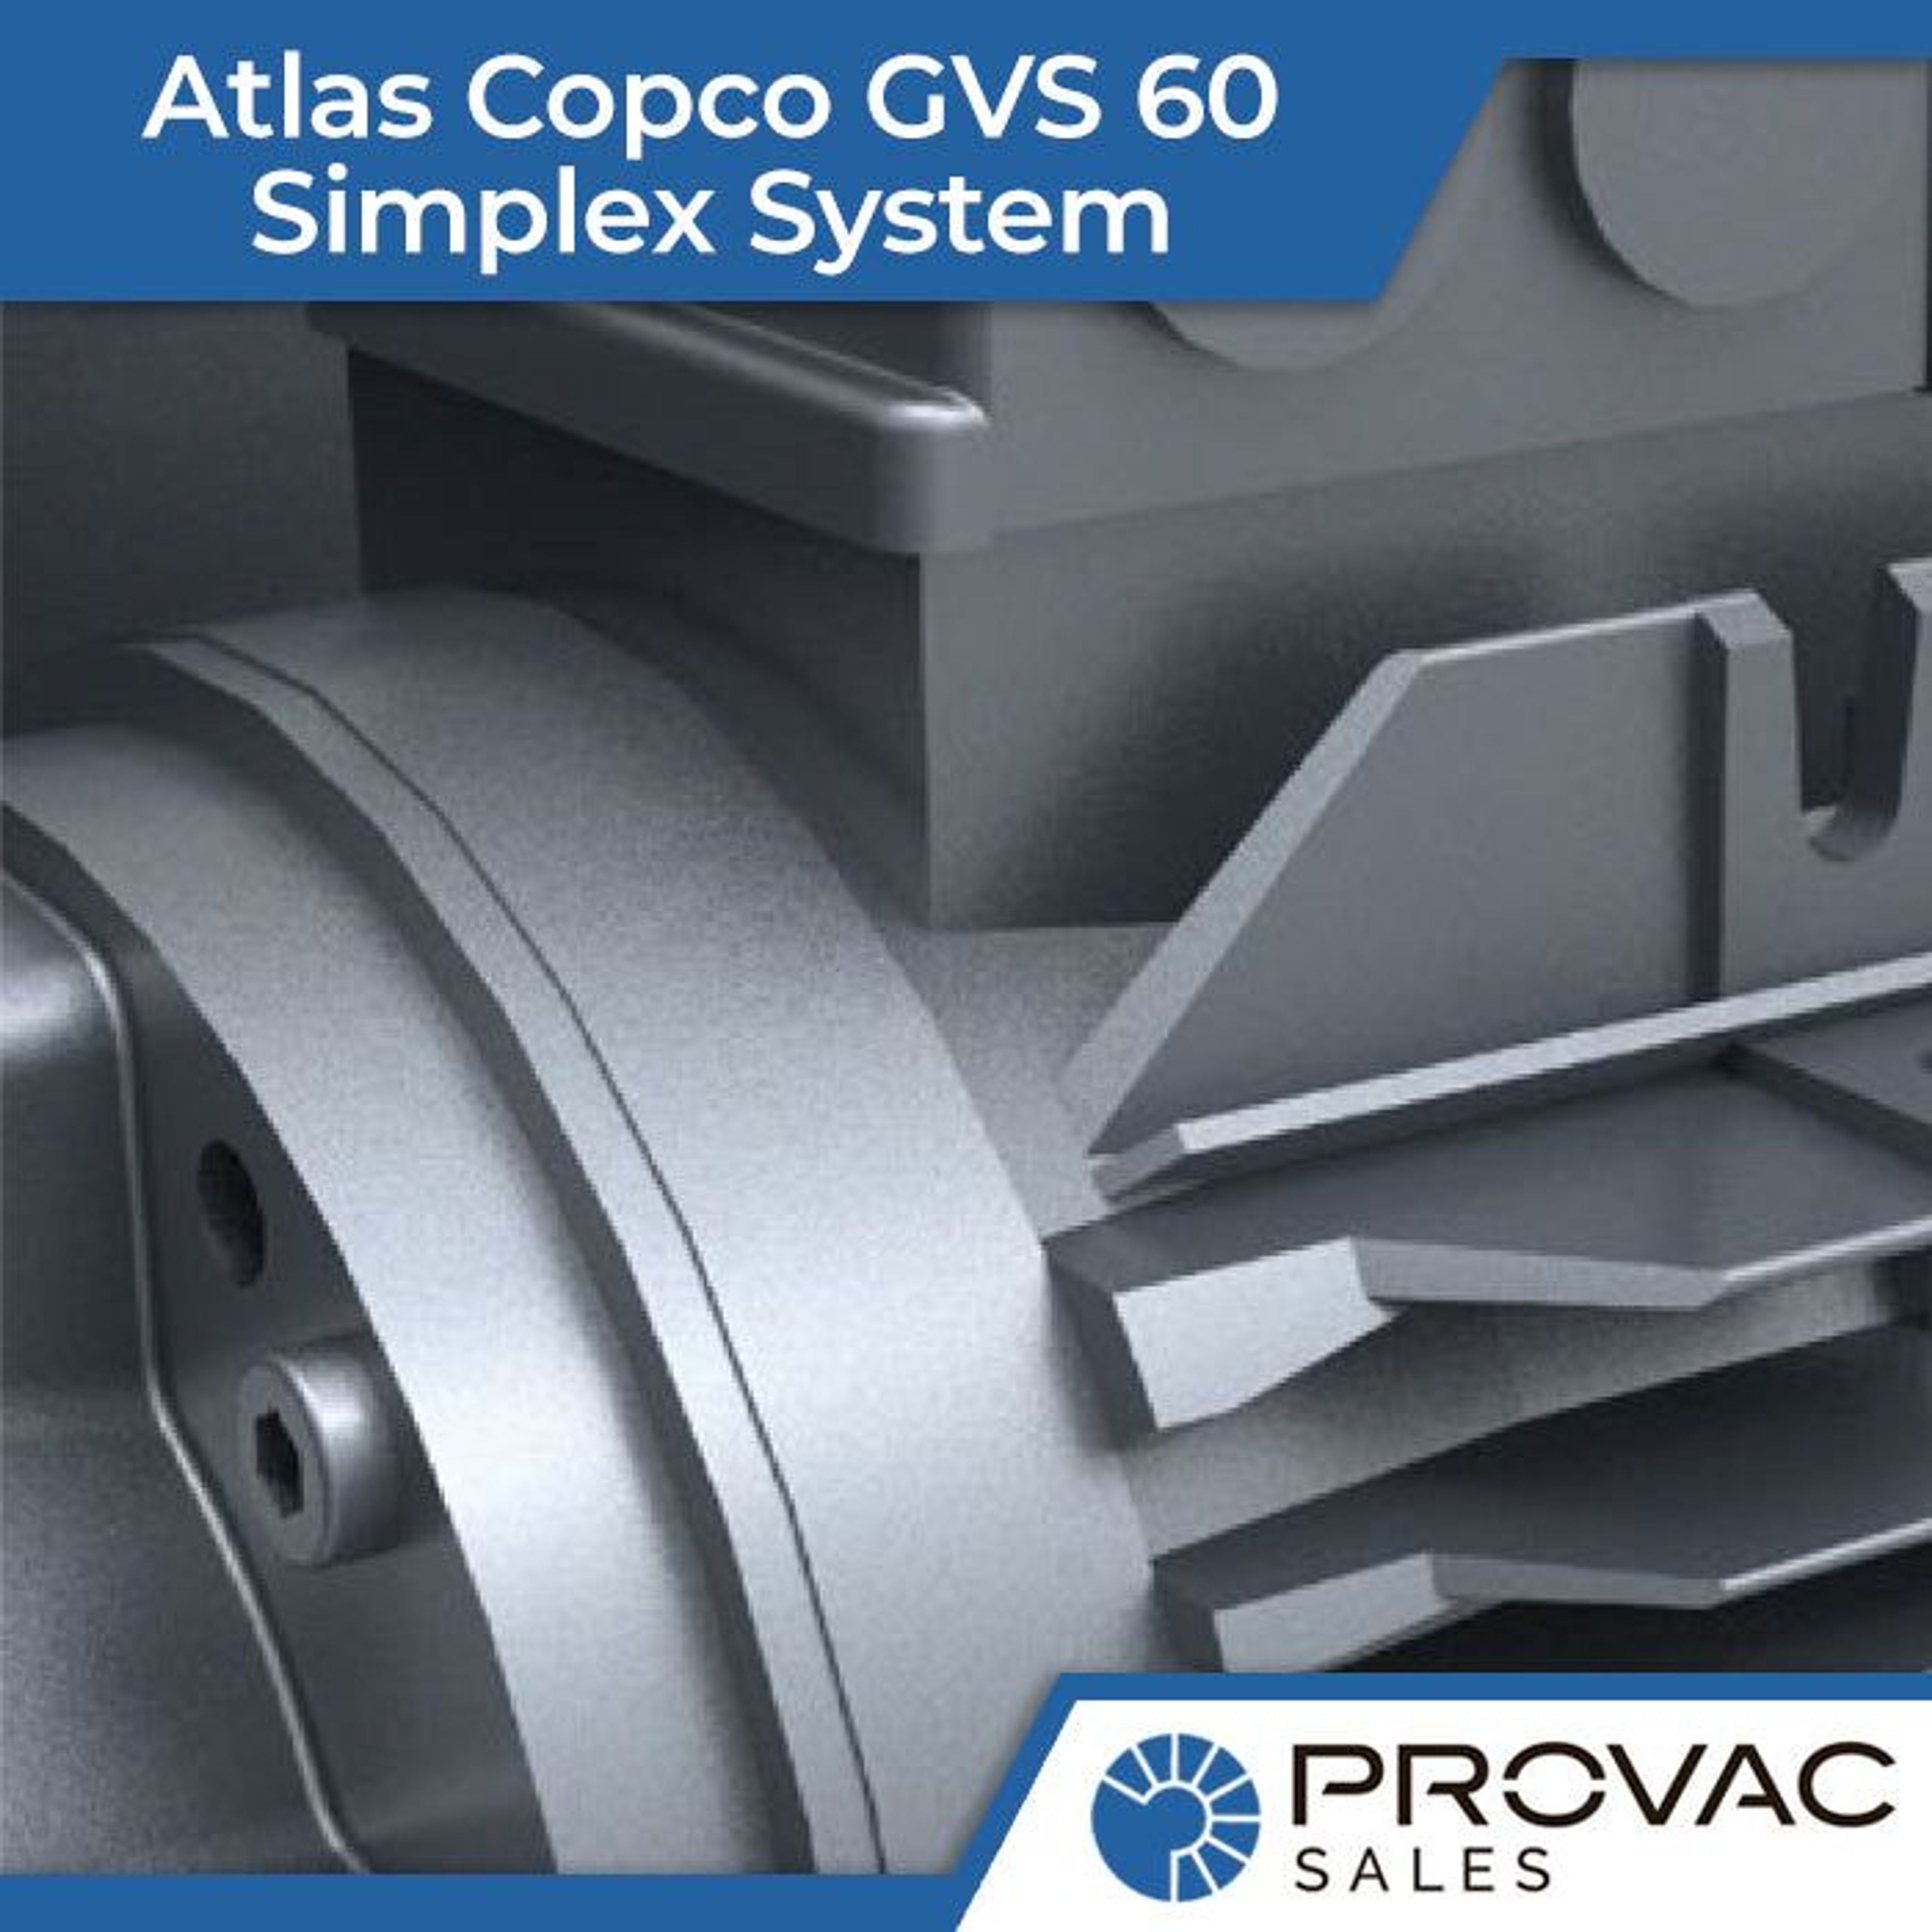 On Sale Now: Atlas Copco GVS 60 Simplex System Background